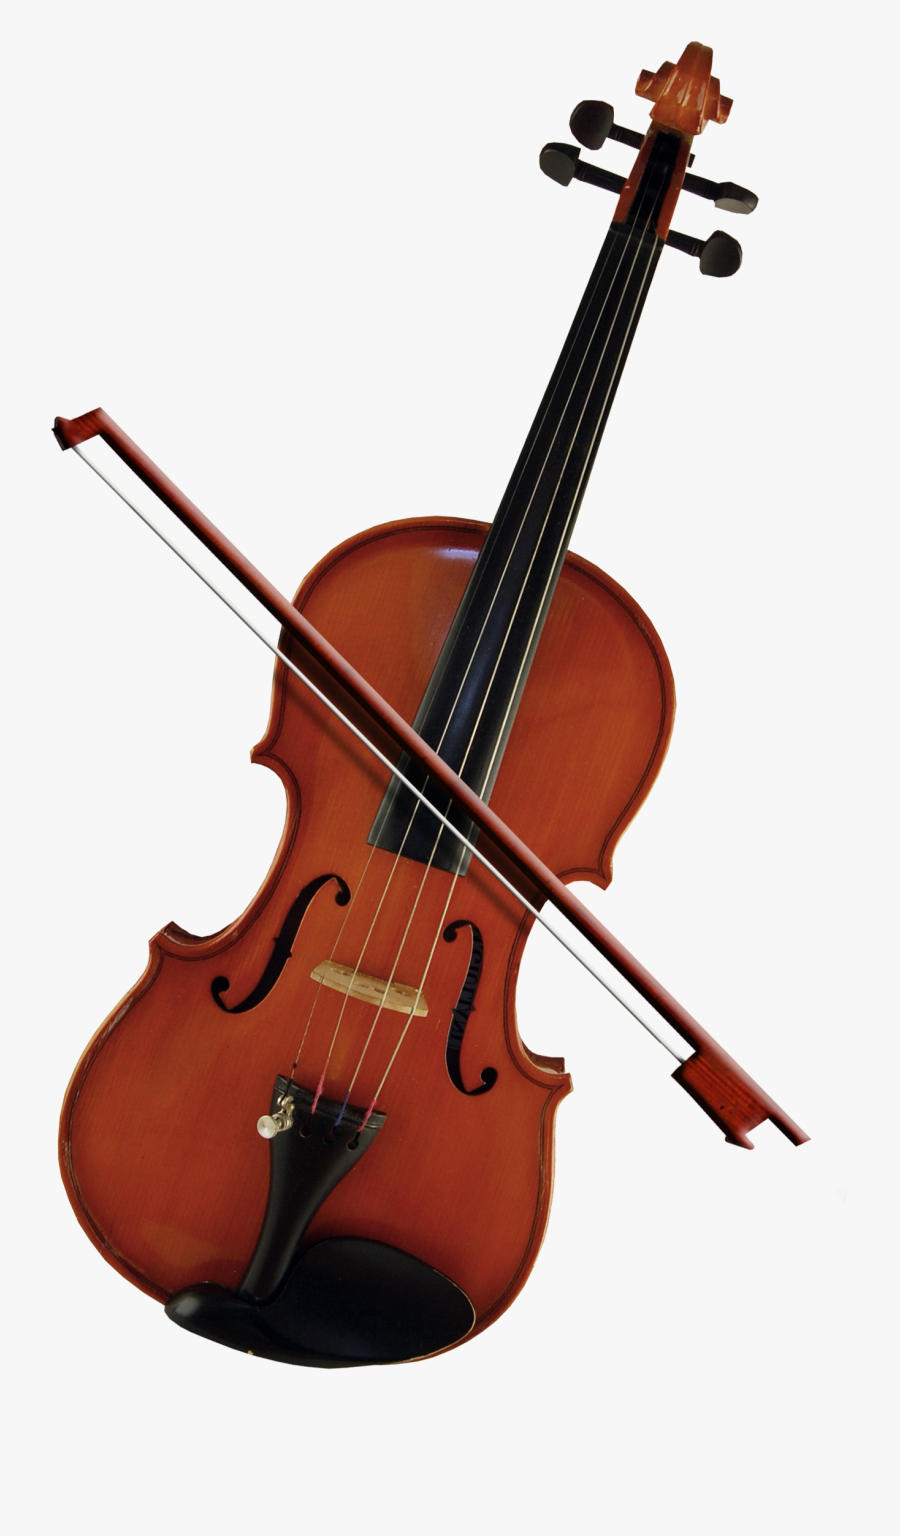 Bass Violin Cello Violone Viola - Violin Png, Transparent Clipart